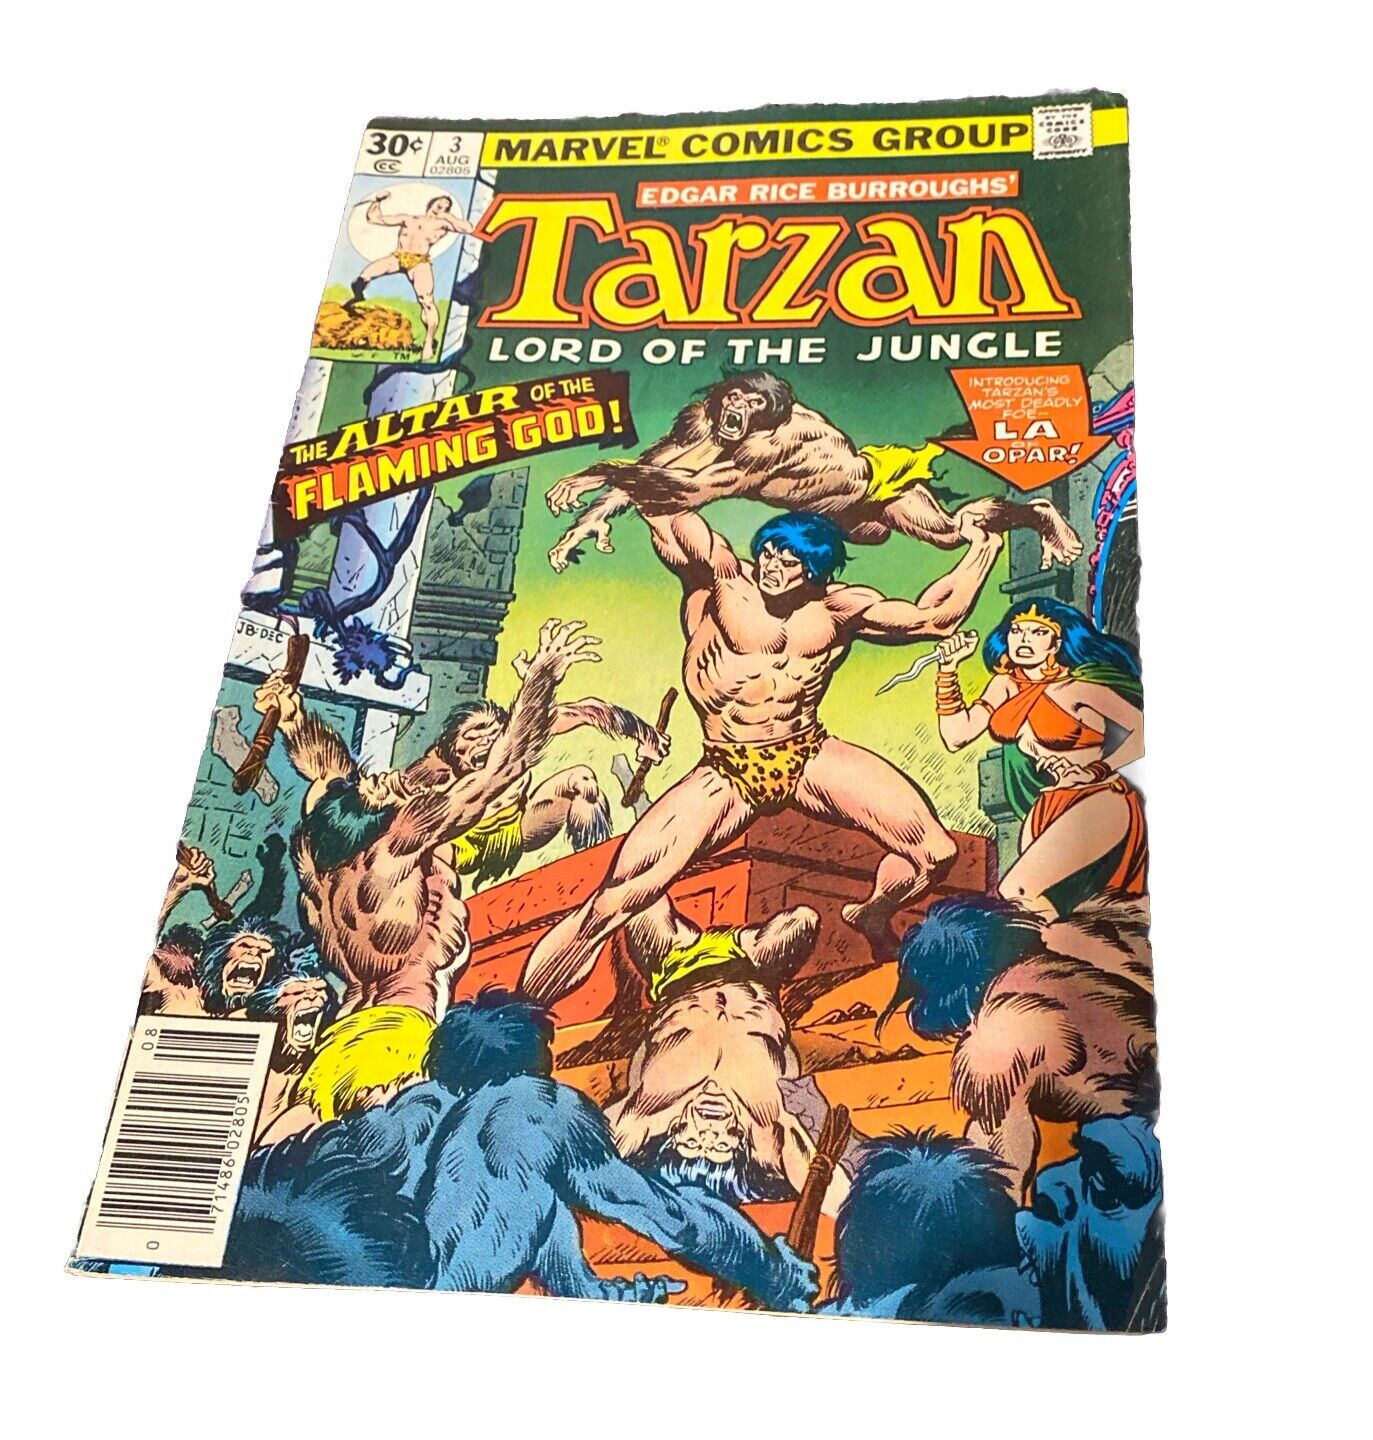  Tarzan Lord of the Jungle # 3 August 1977 Marvel Vintage Bronze Era